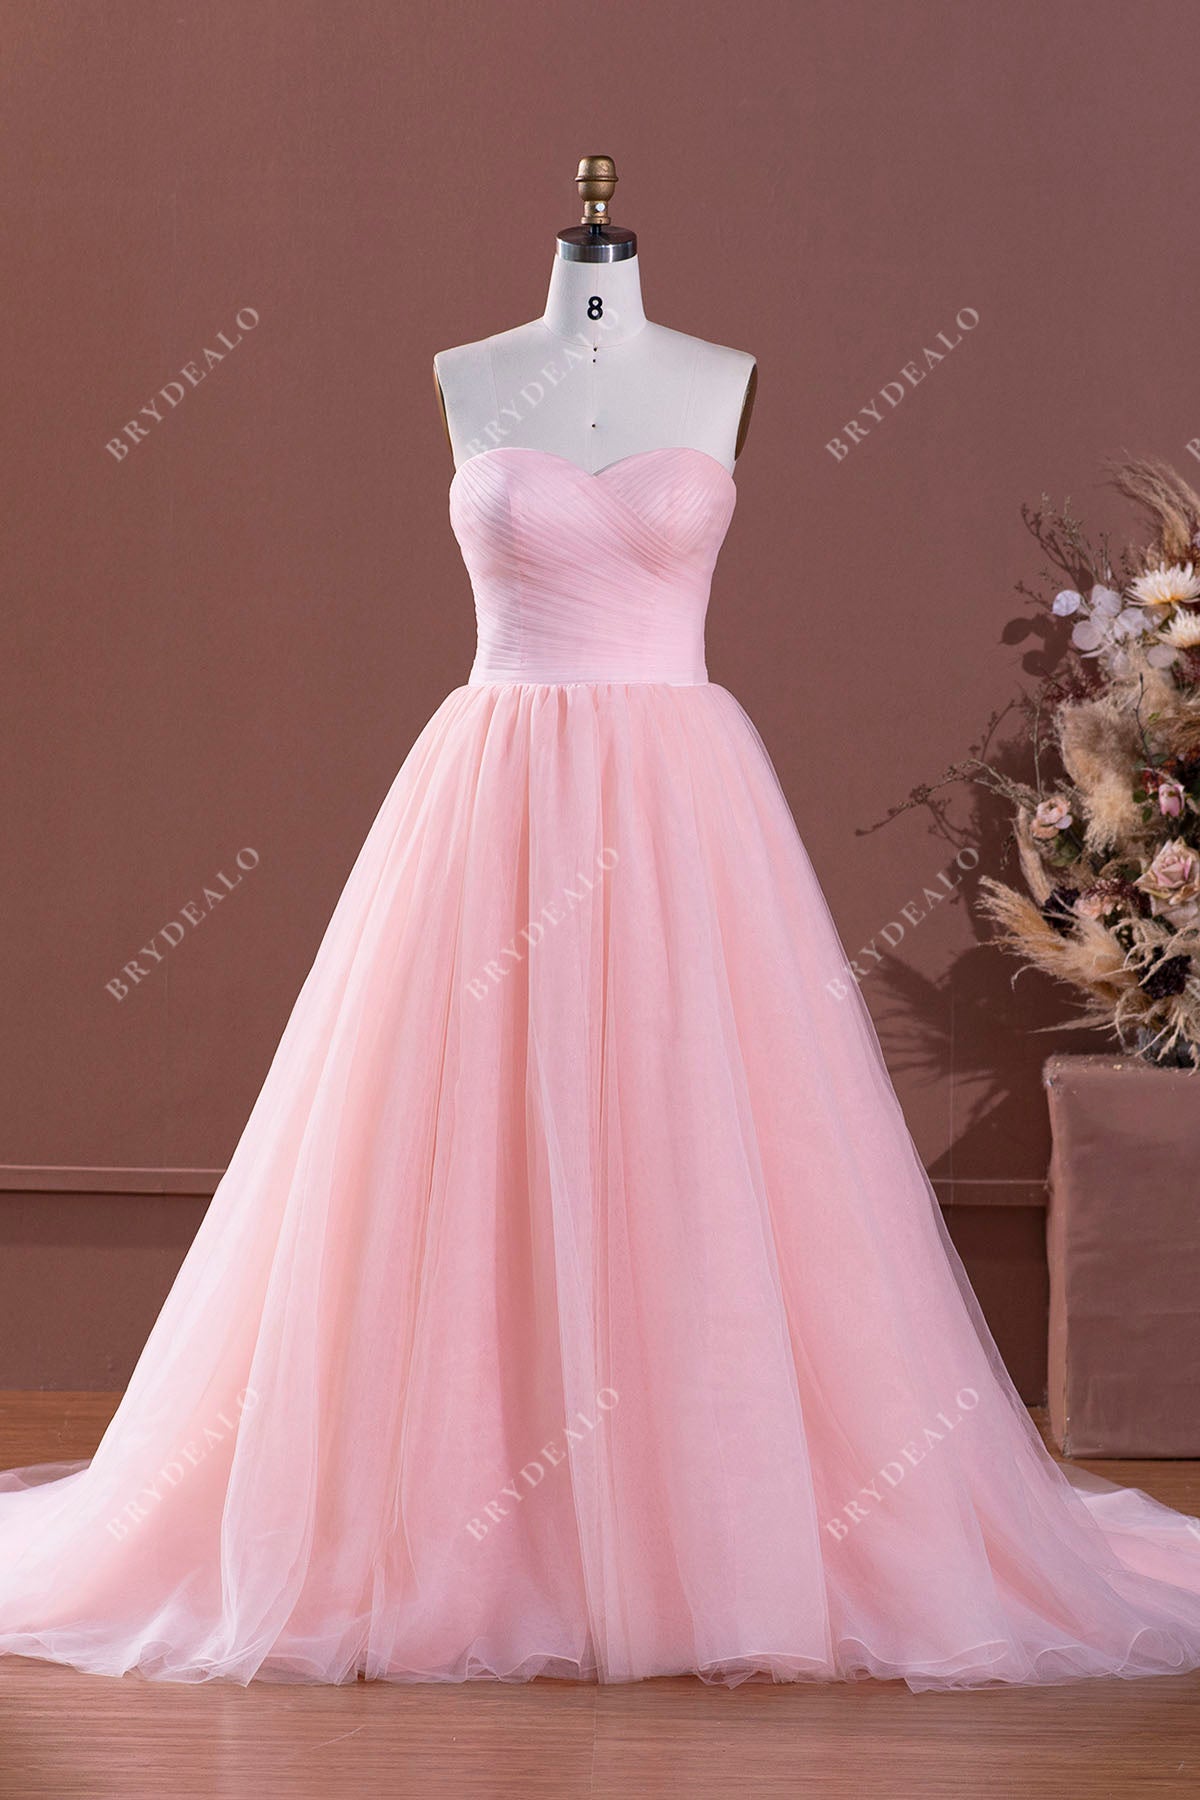 pink princess tulle strapless wedding dress